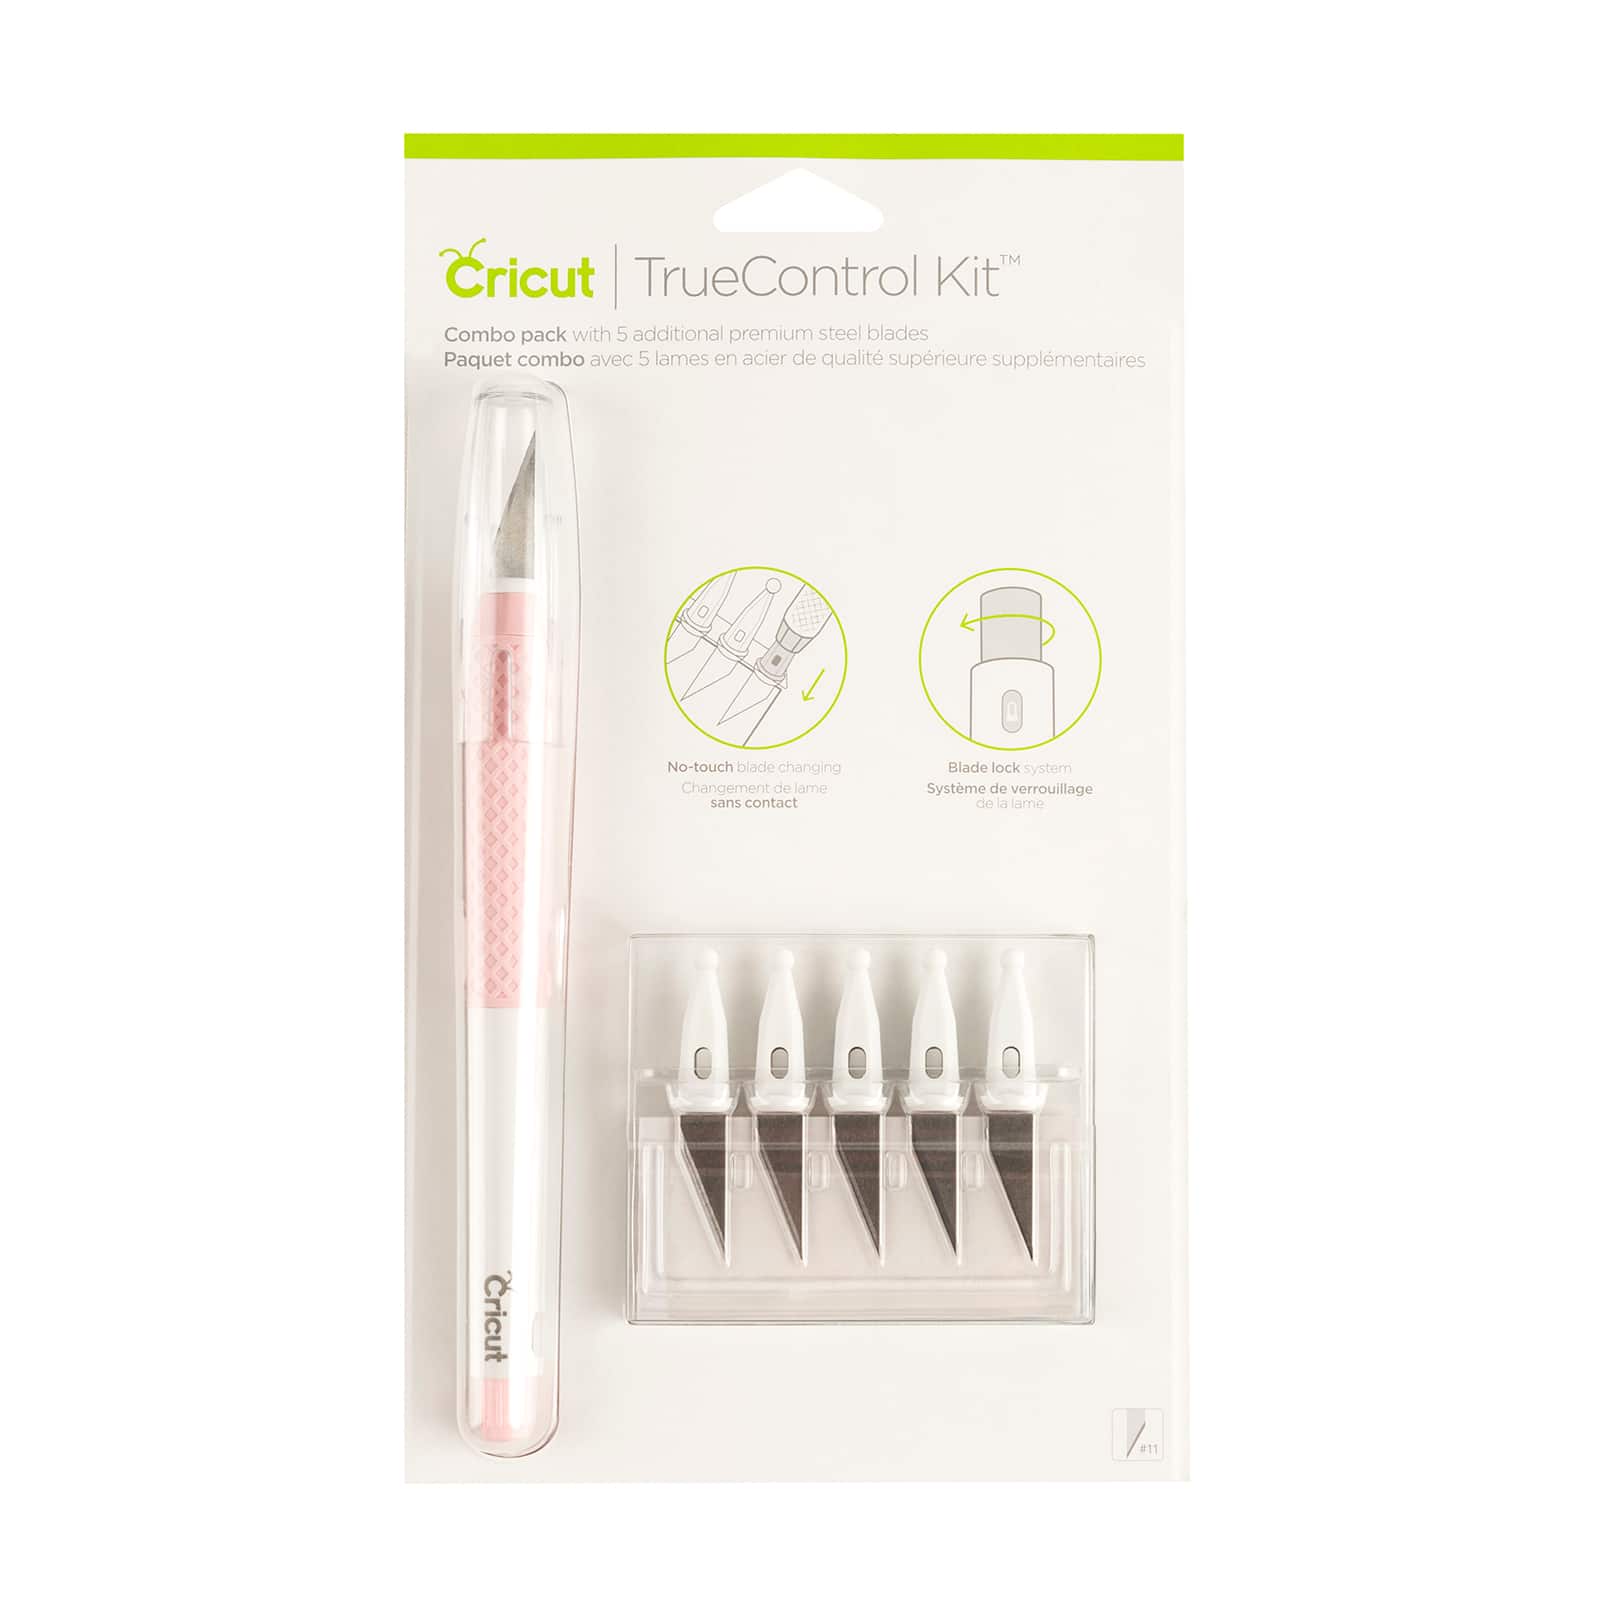  Cricut Weeding Tool Kit